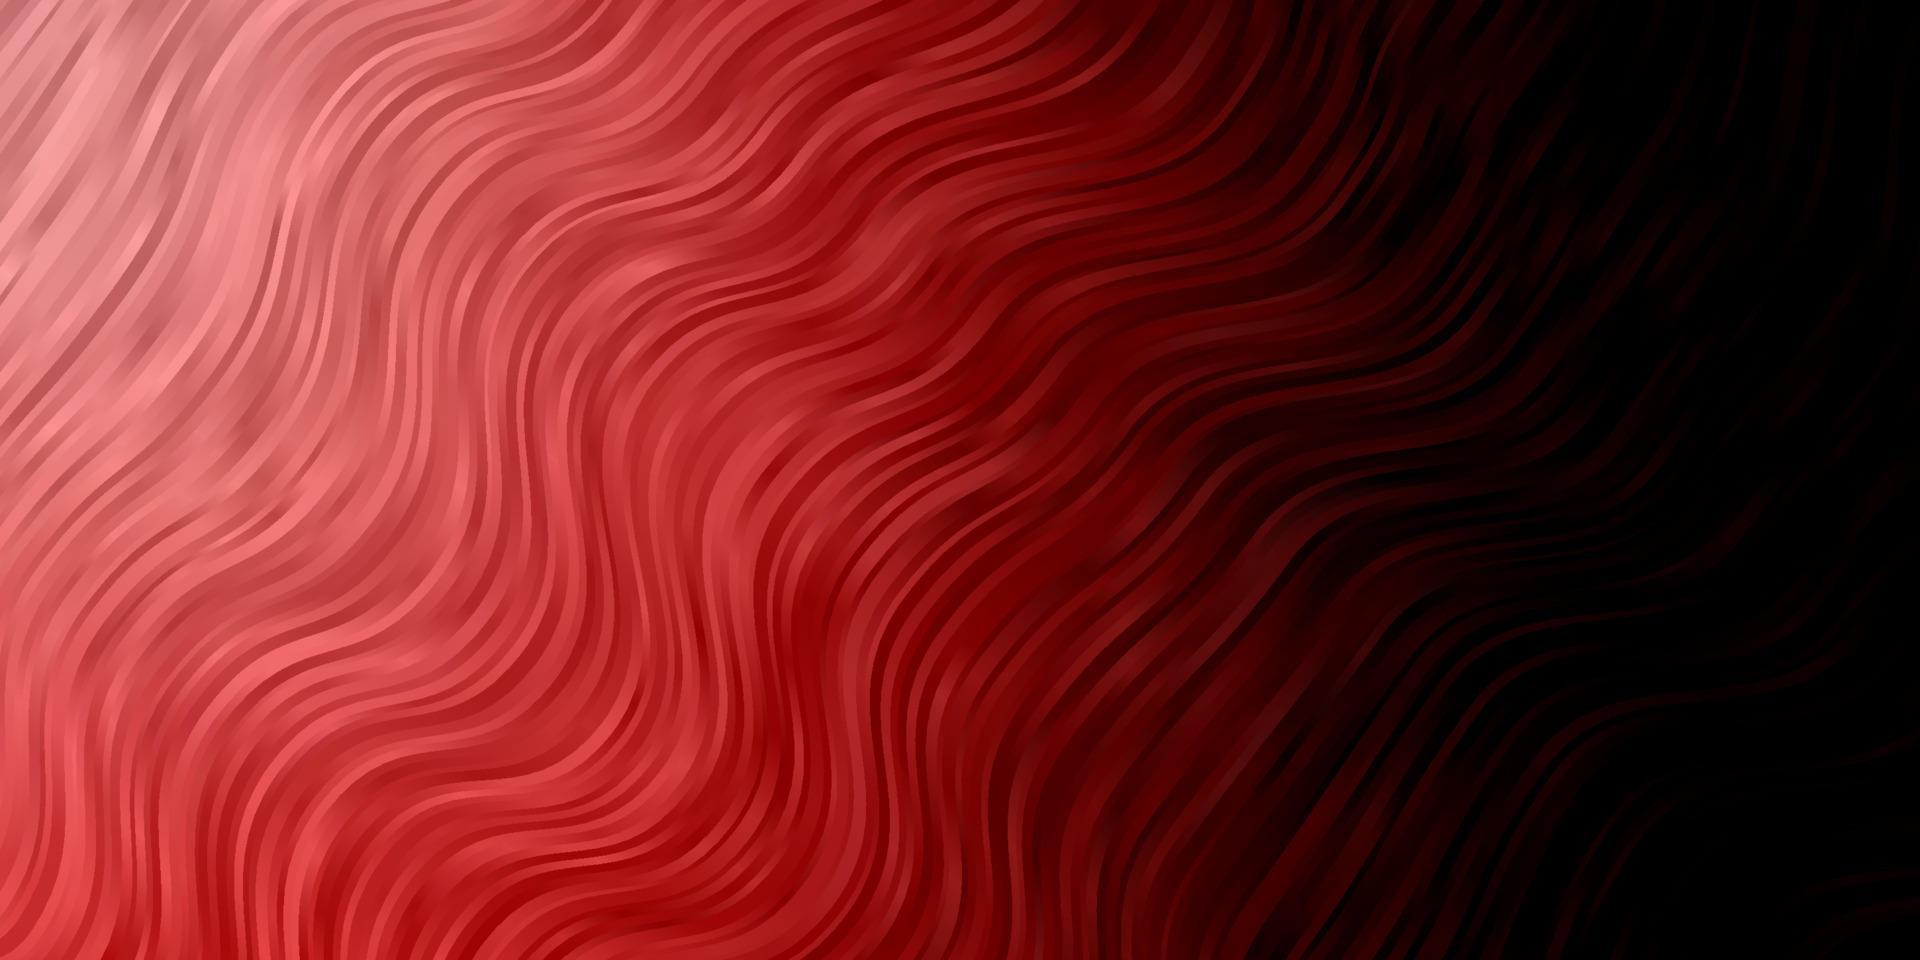 hellrosa, rote Vektortextur mit trockenen Linien. vektor